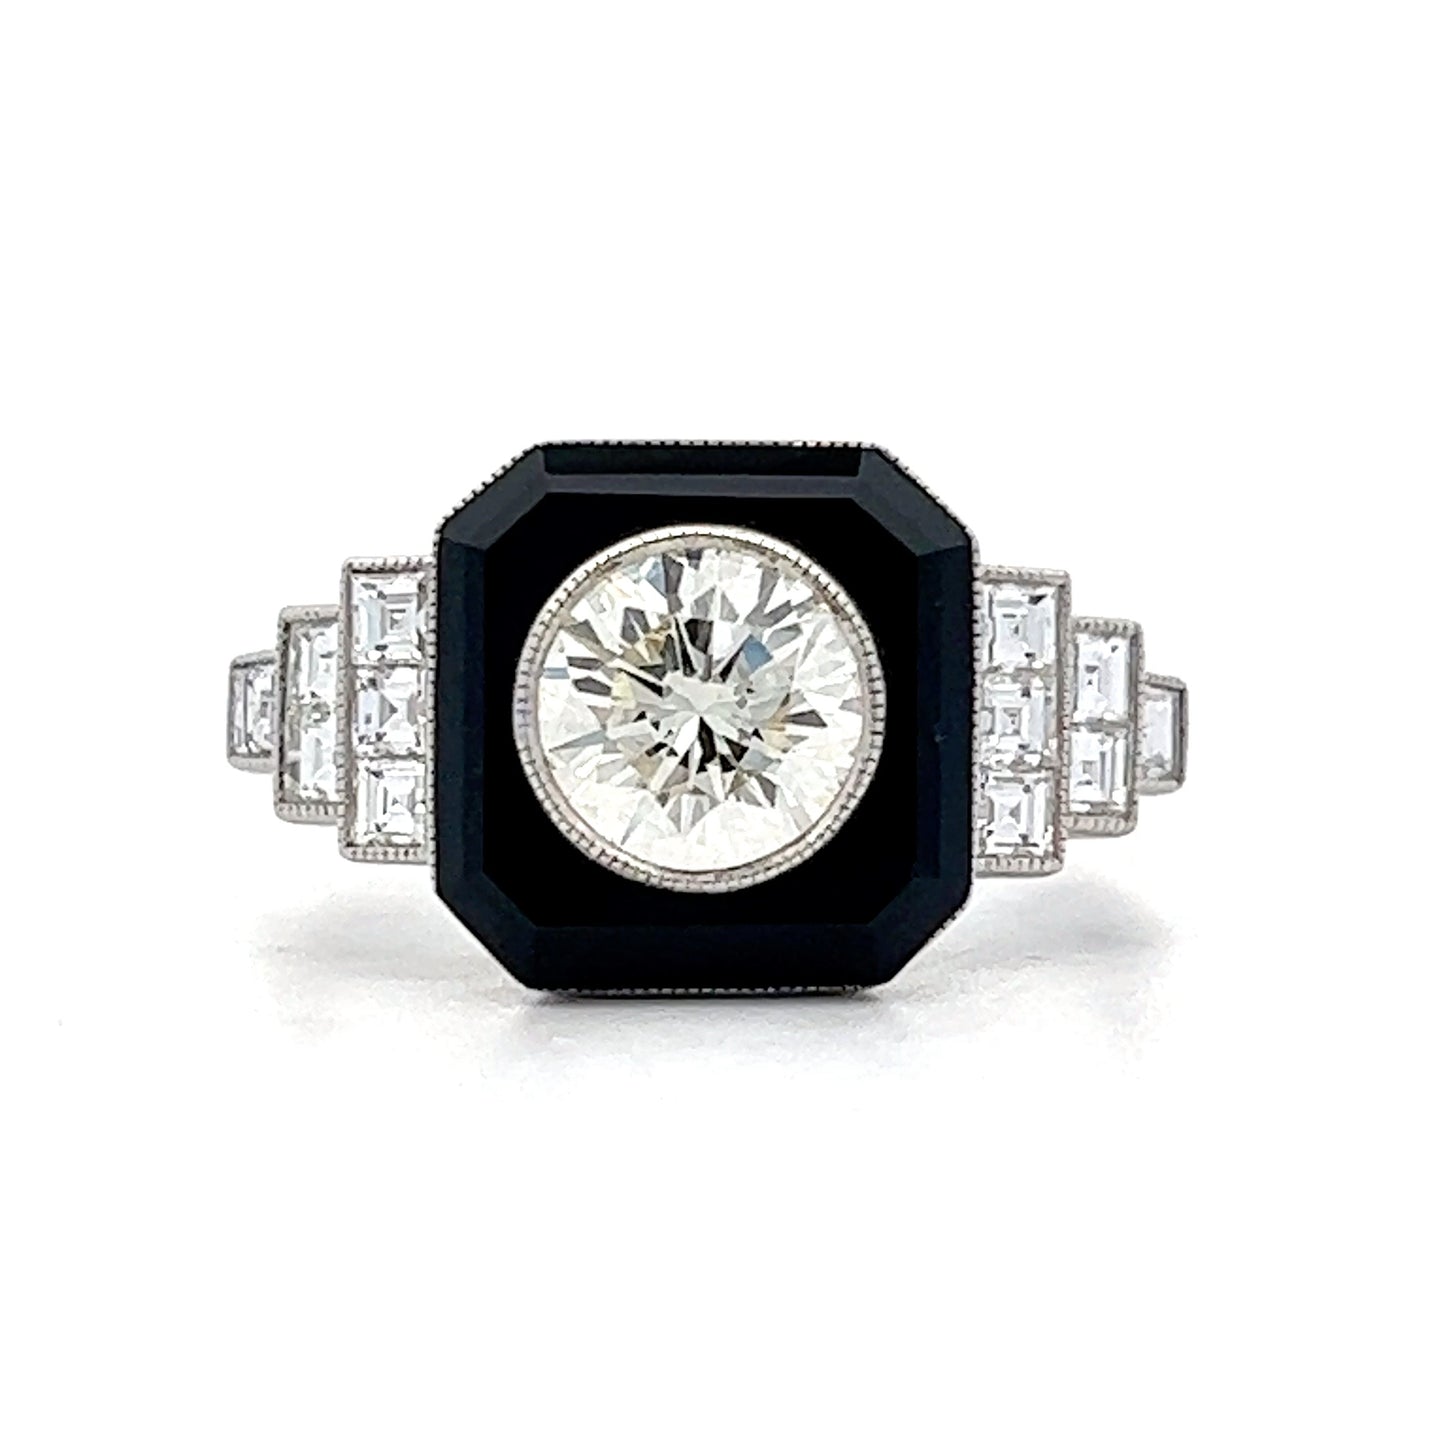 1.02 Transitional Cut Diamond Engagement Ring in Platinum